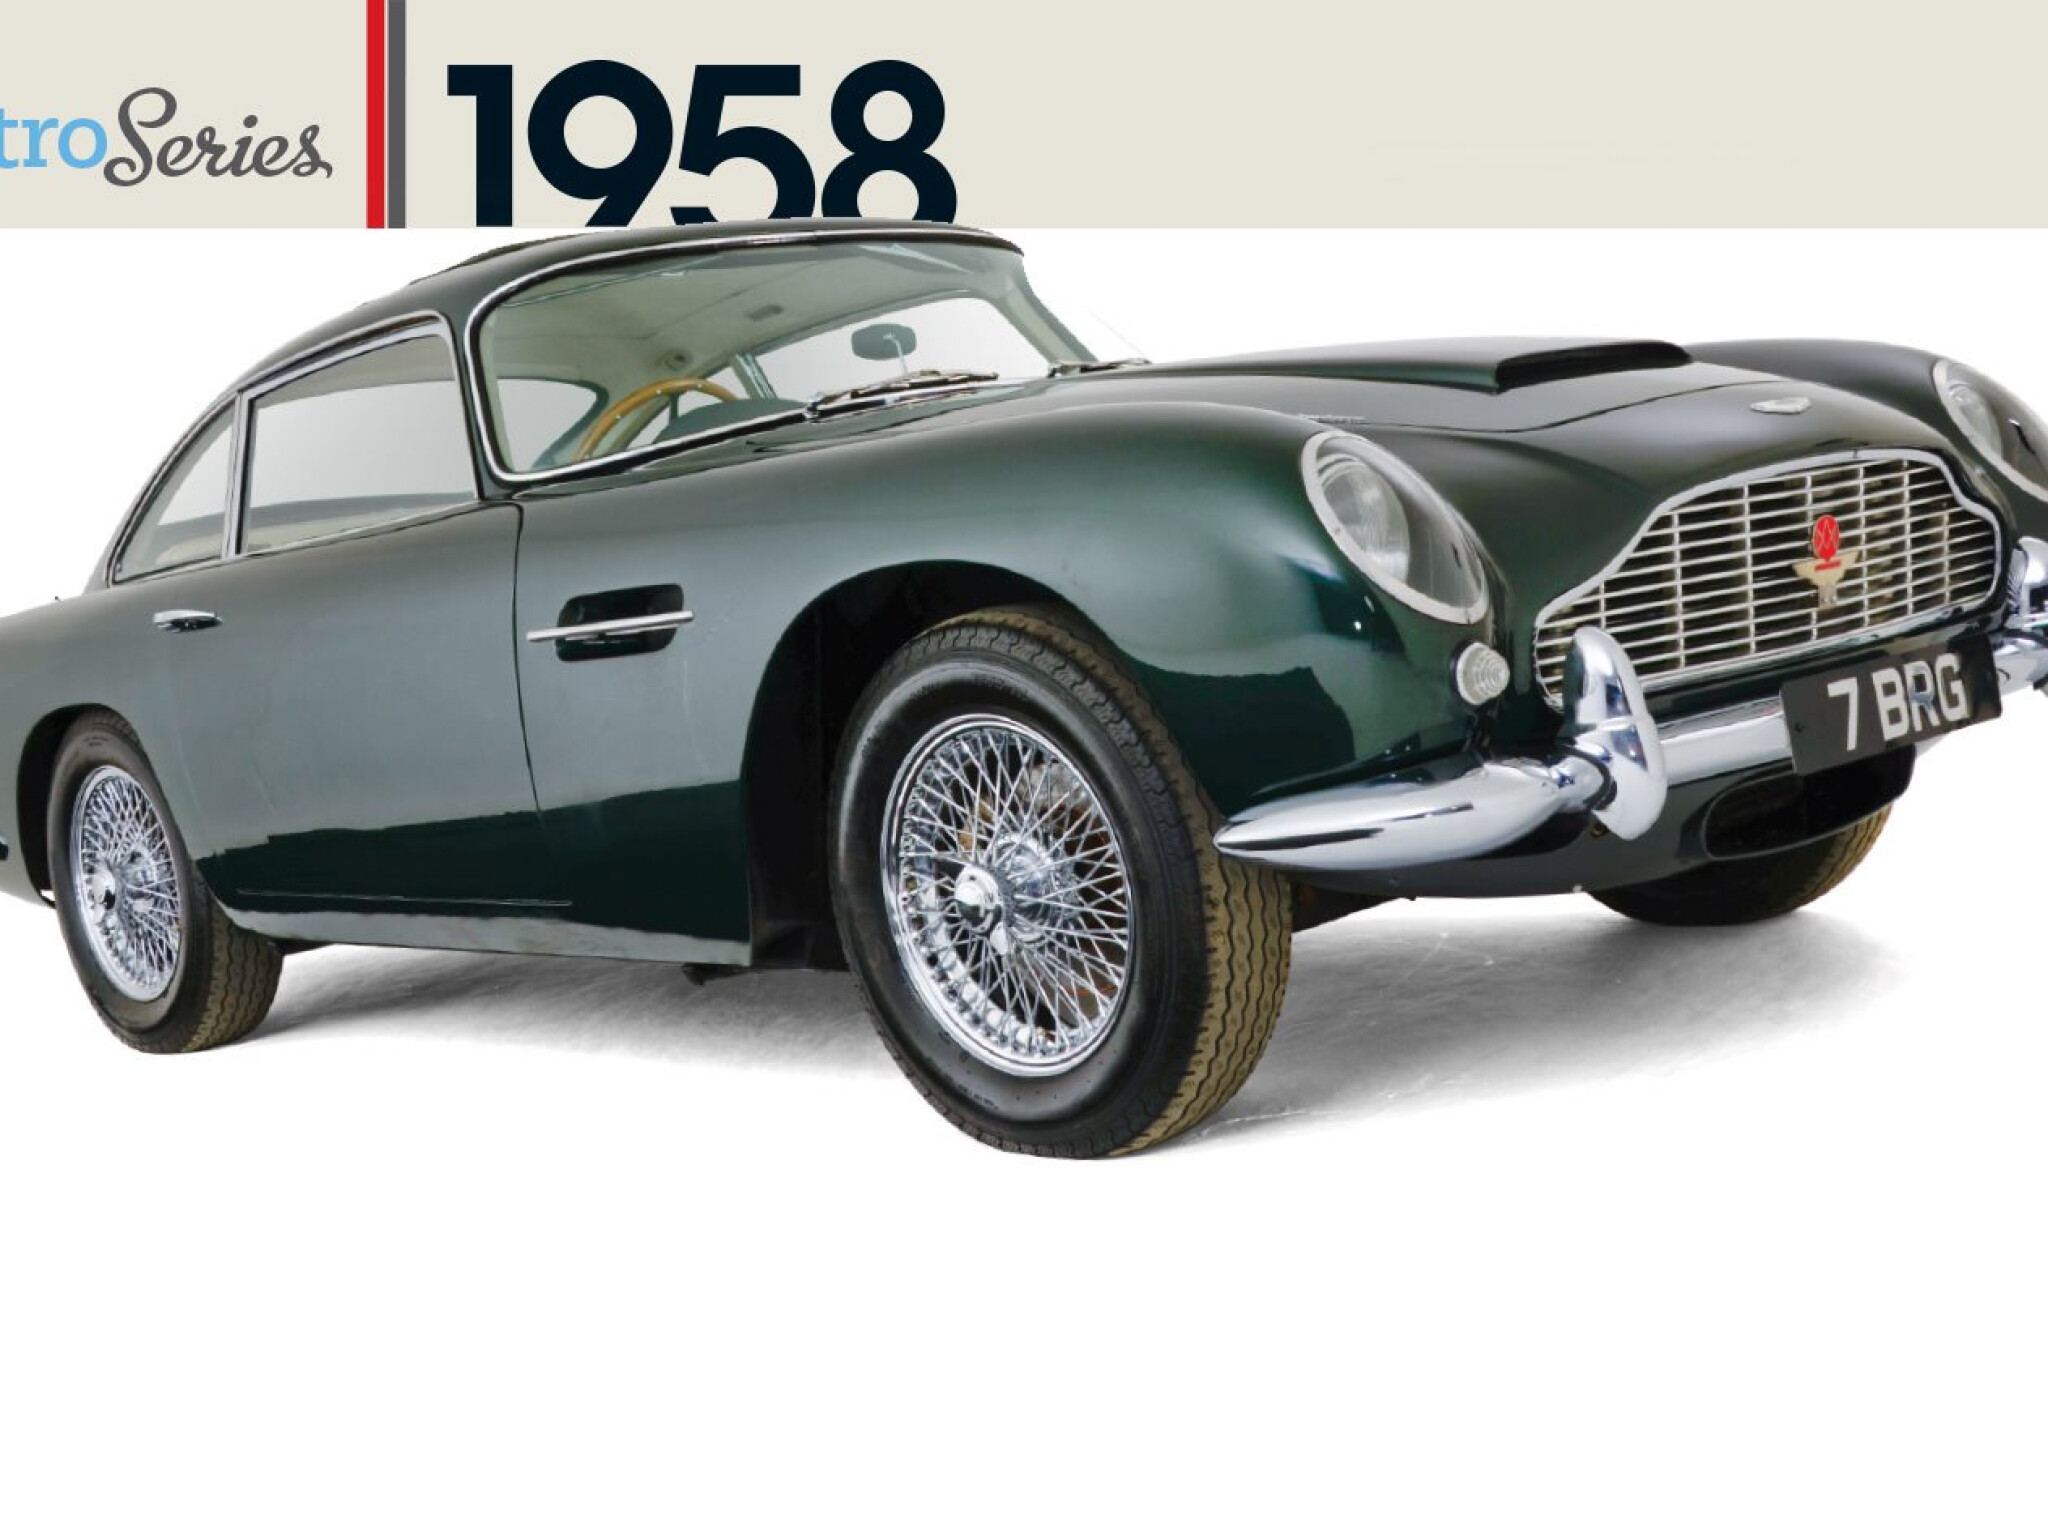 1958 Aston Martin DB4: Retro